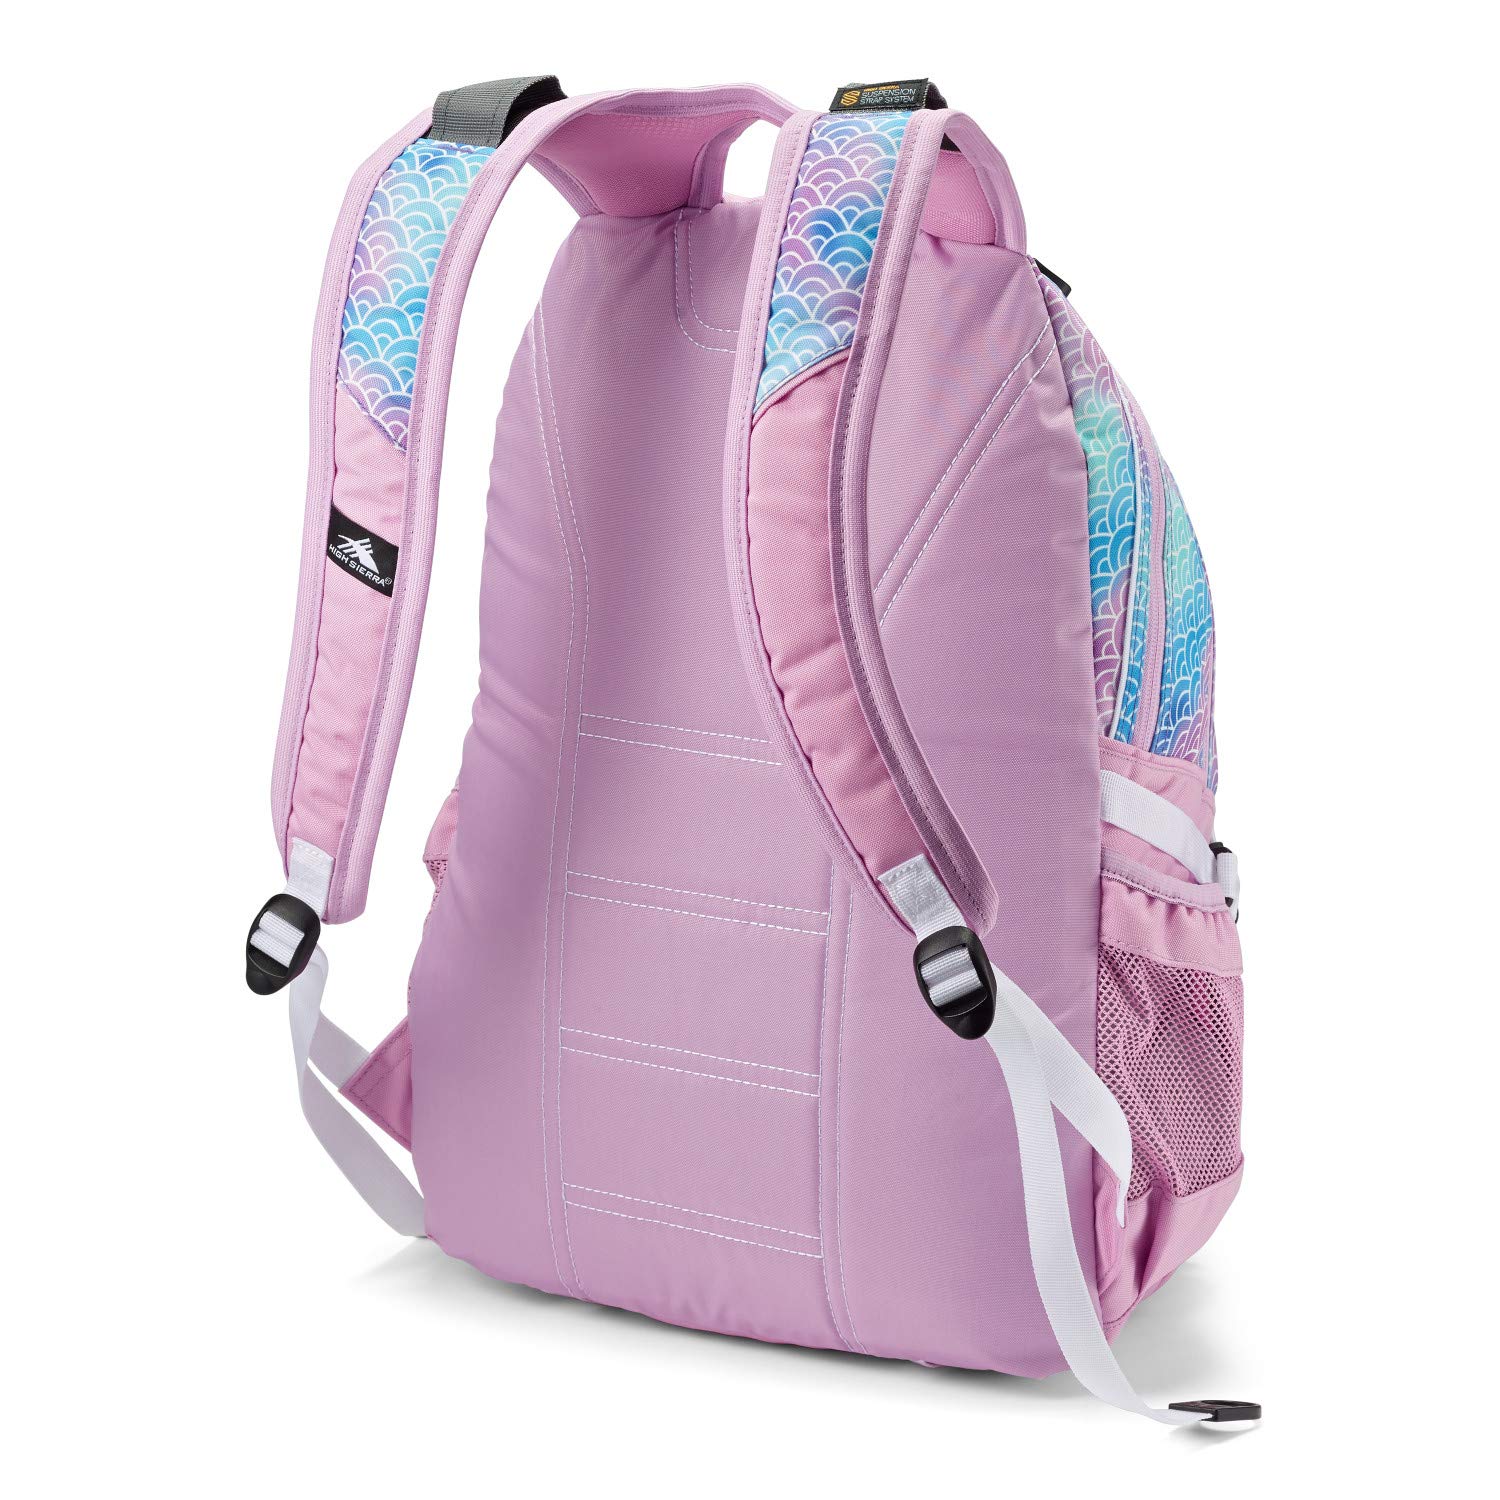 High Sierra Loop Backpack, Travel, or Work Bookbag with tablet sleeve, One Size, Rainbow Scales